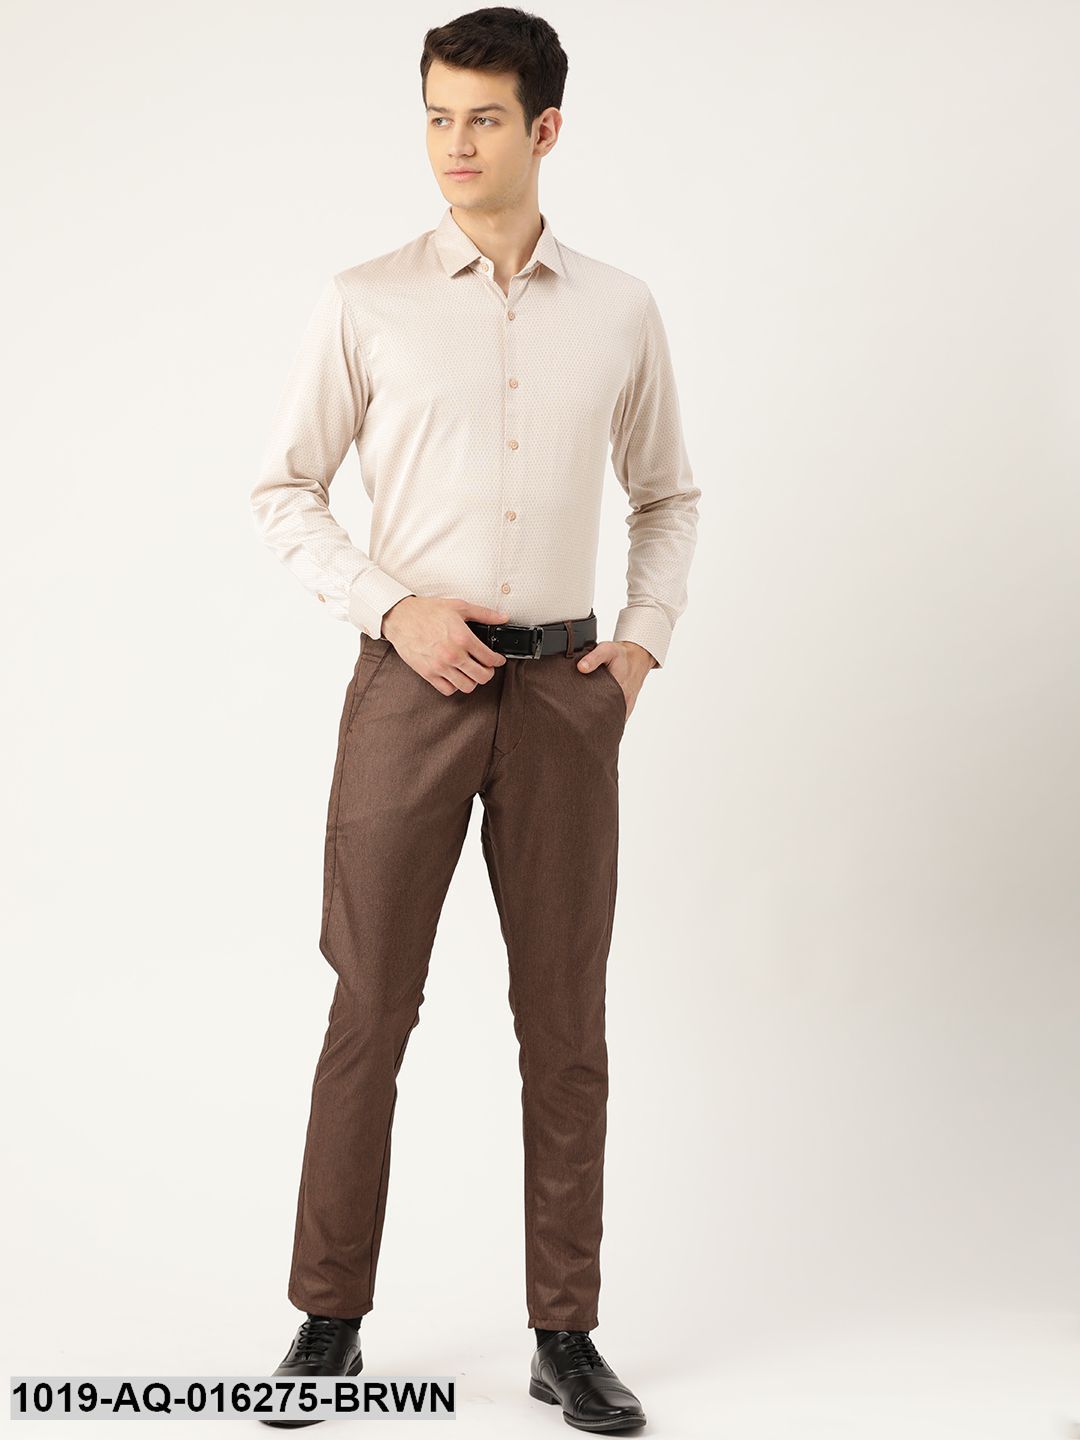 Buy Gold Trousers & Pants for Men by SOJANYA Online